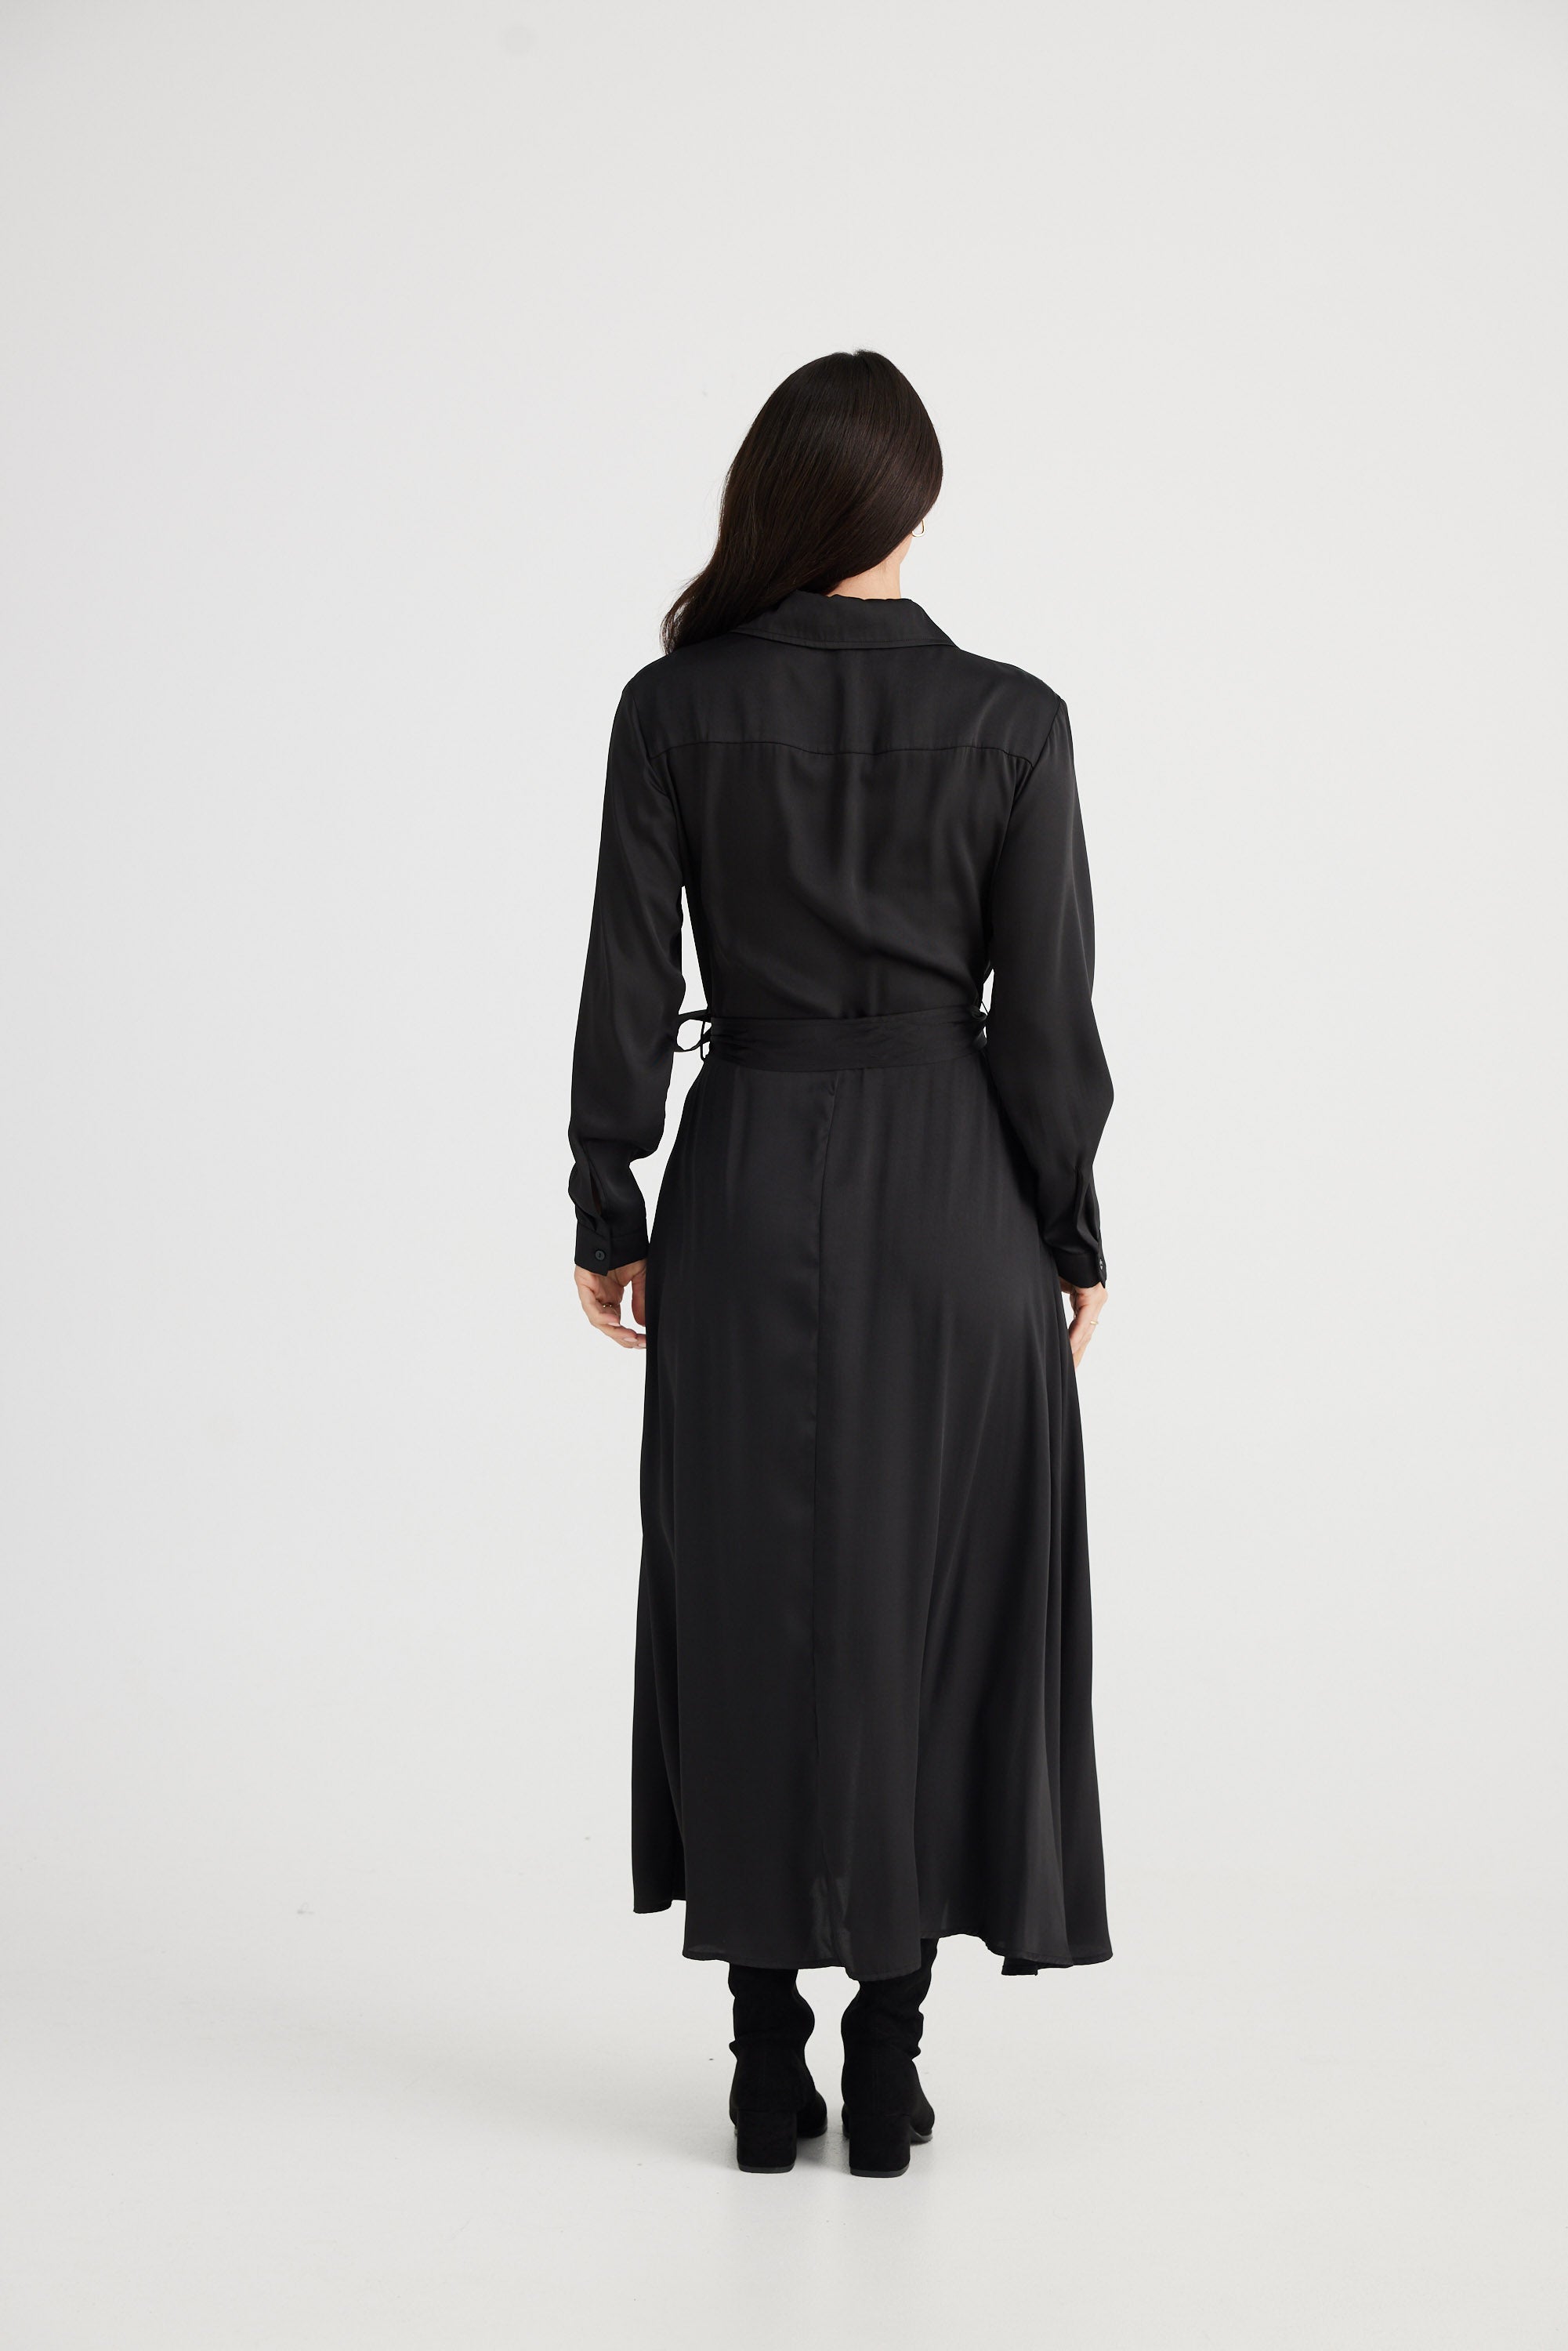 Rossellini 3/4 Sleeve Dress - Black-Dresses-Brave & True-The Bay Room